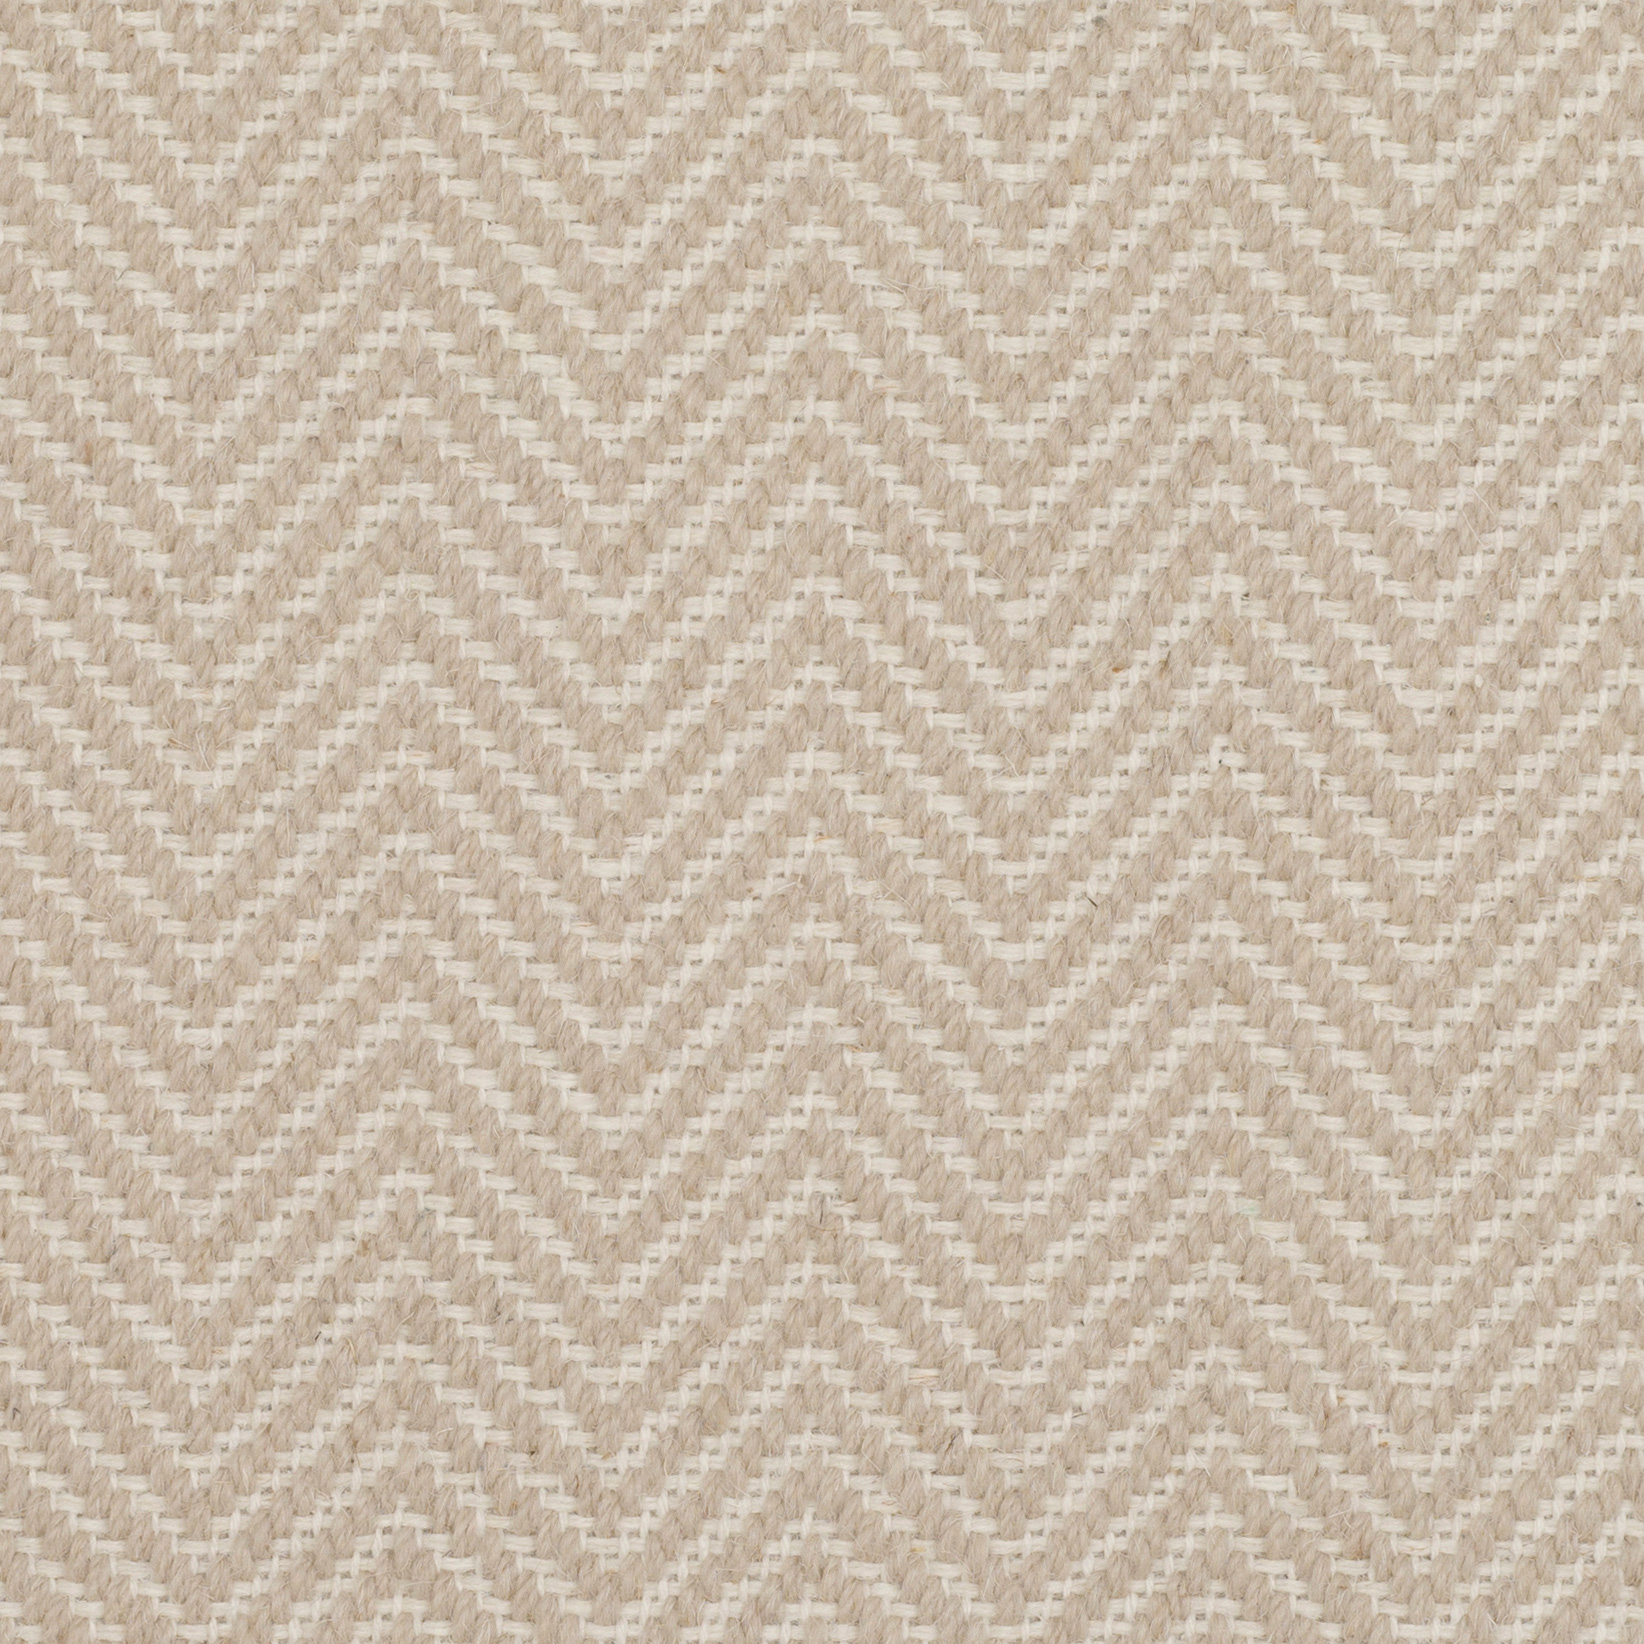 Sorrento: Canella - 100% Wool Carpet